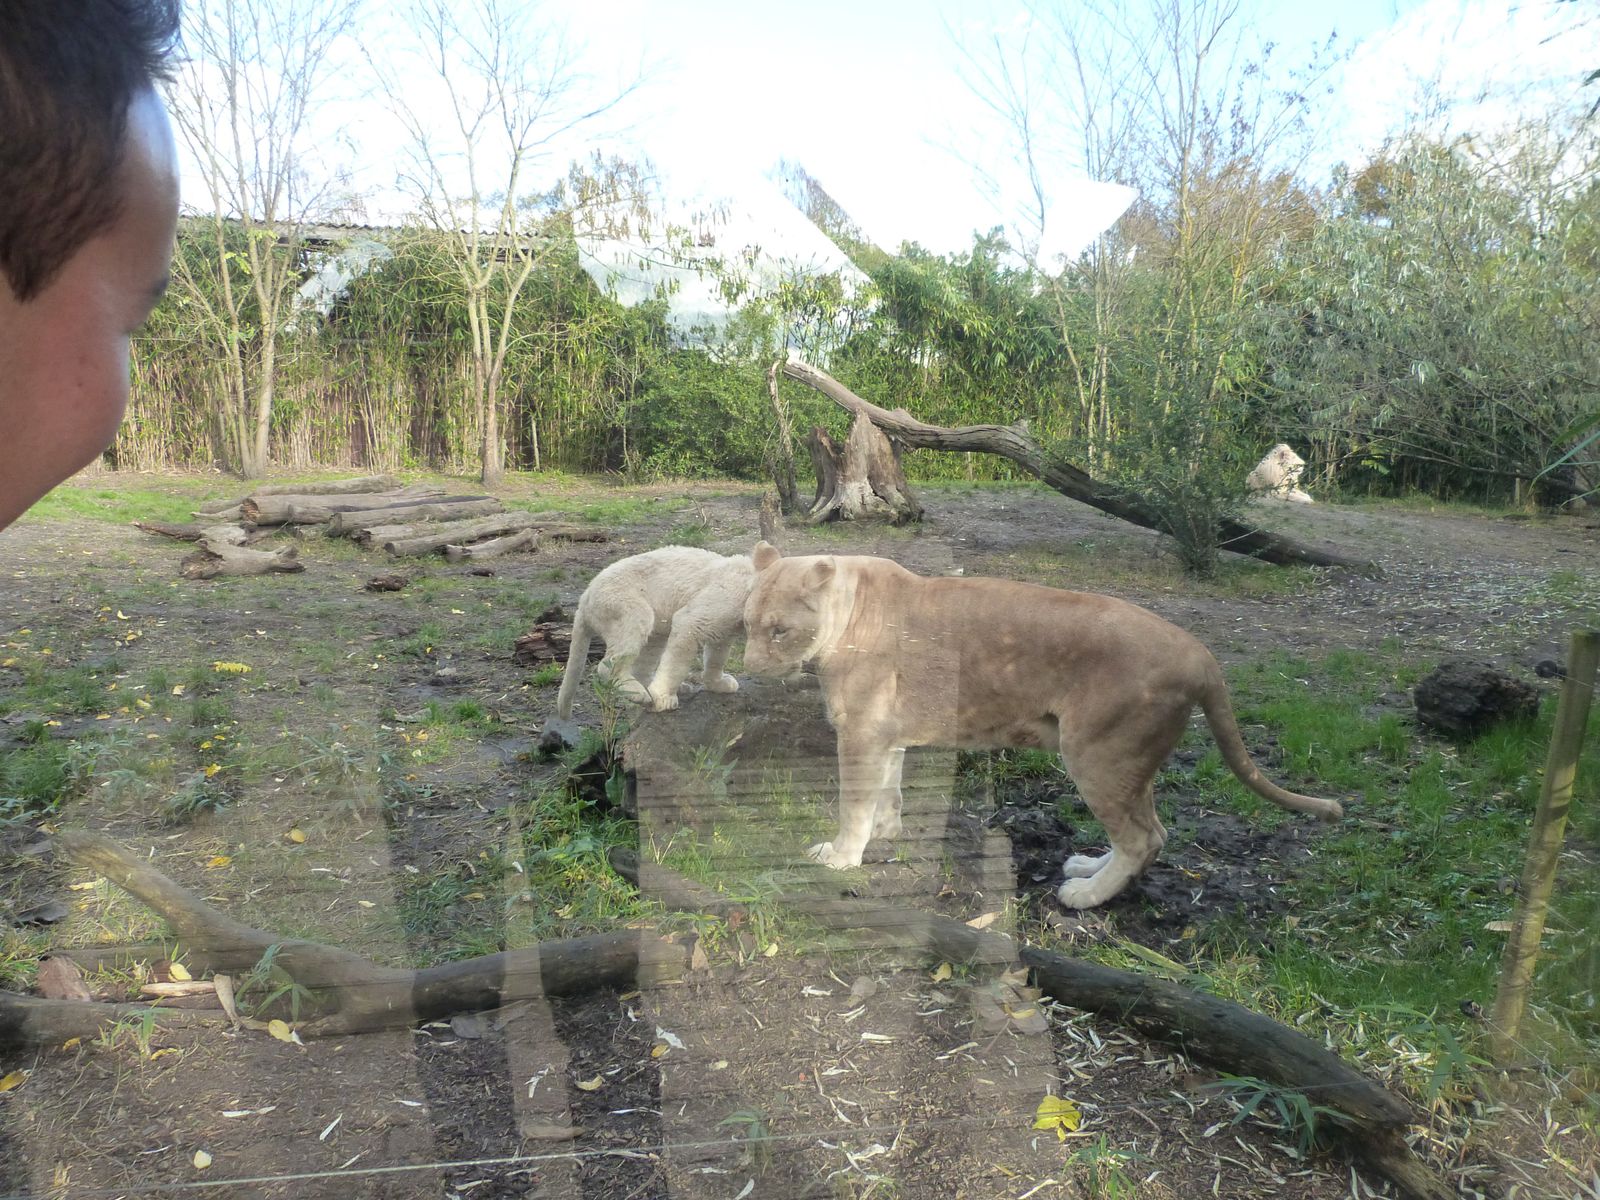 Notre visite au Zoo de pessac, novembre 2012